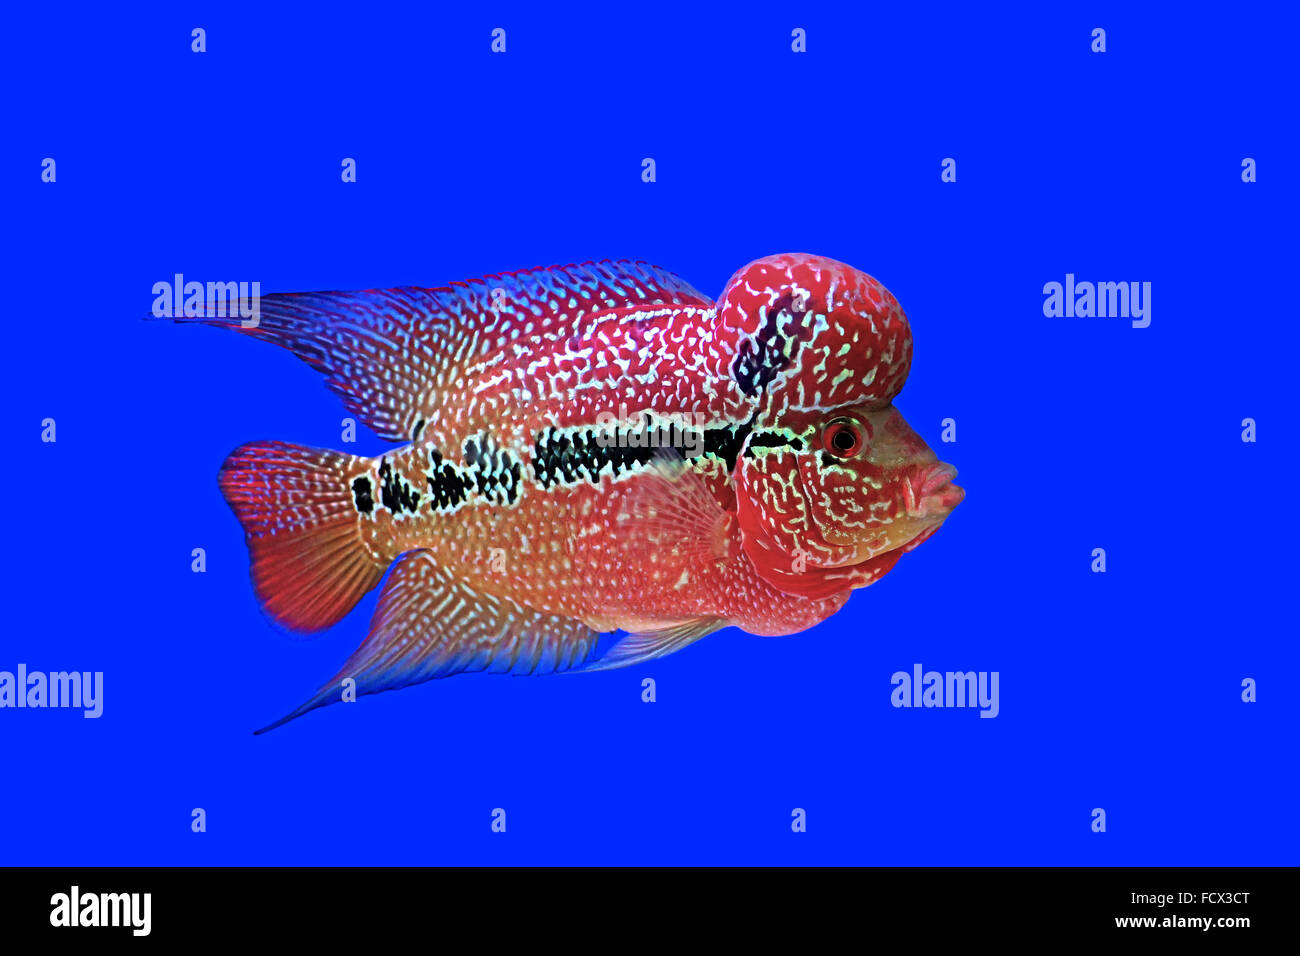 flowerhorn cichlid or cichlasoma fish in the aquarium Stock Photo